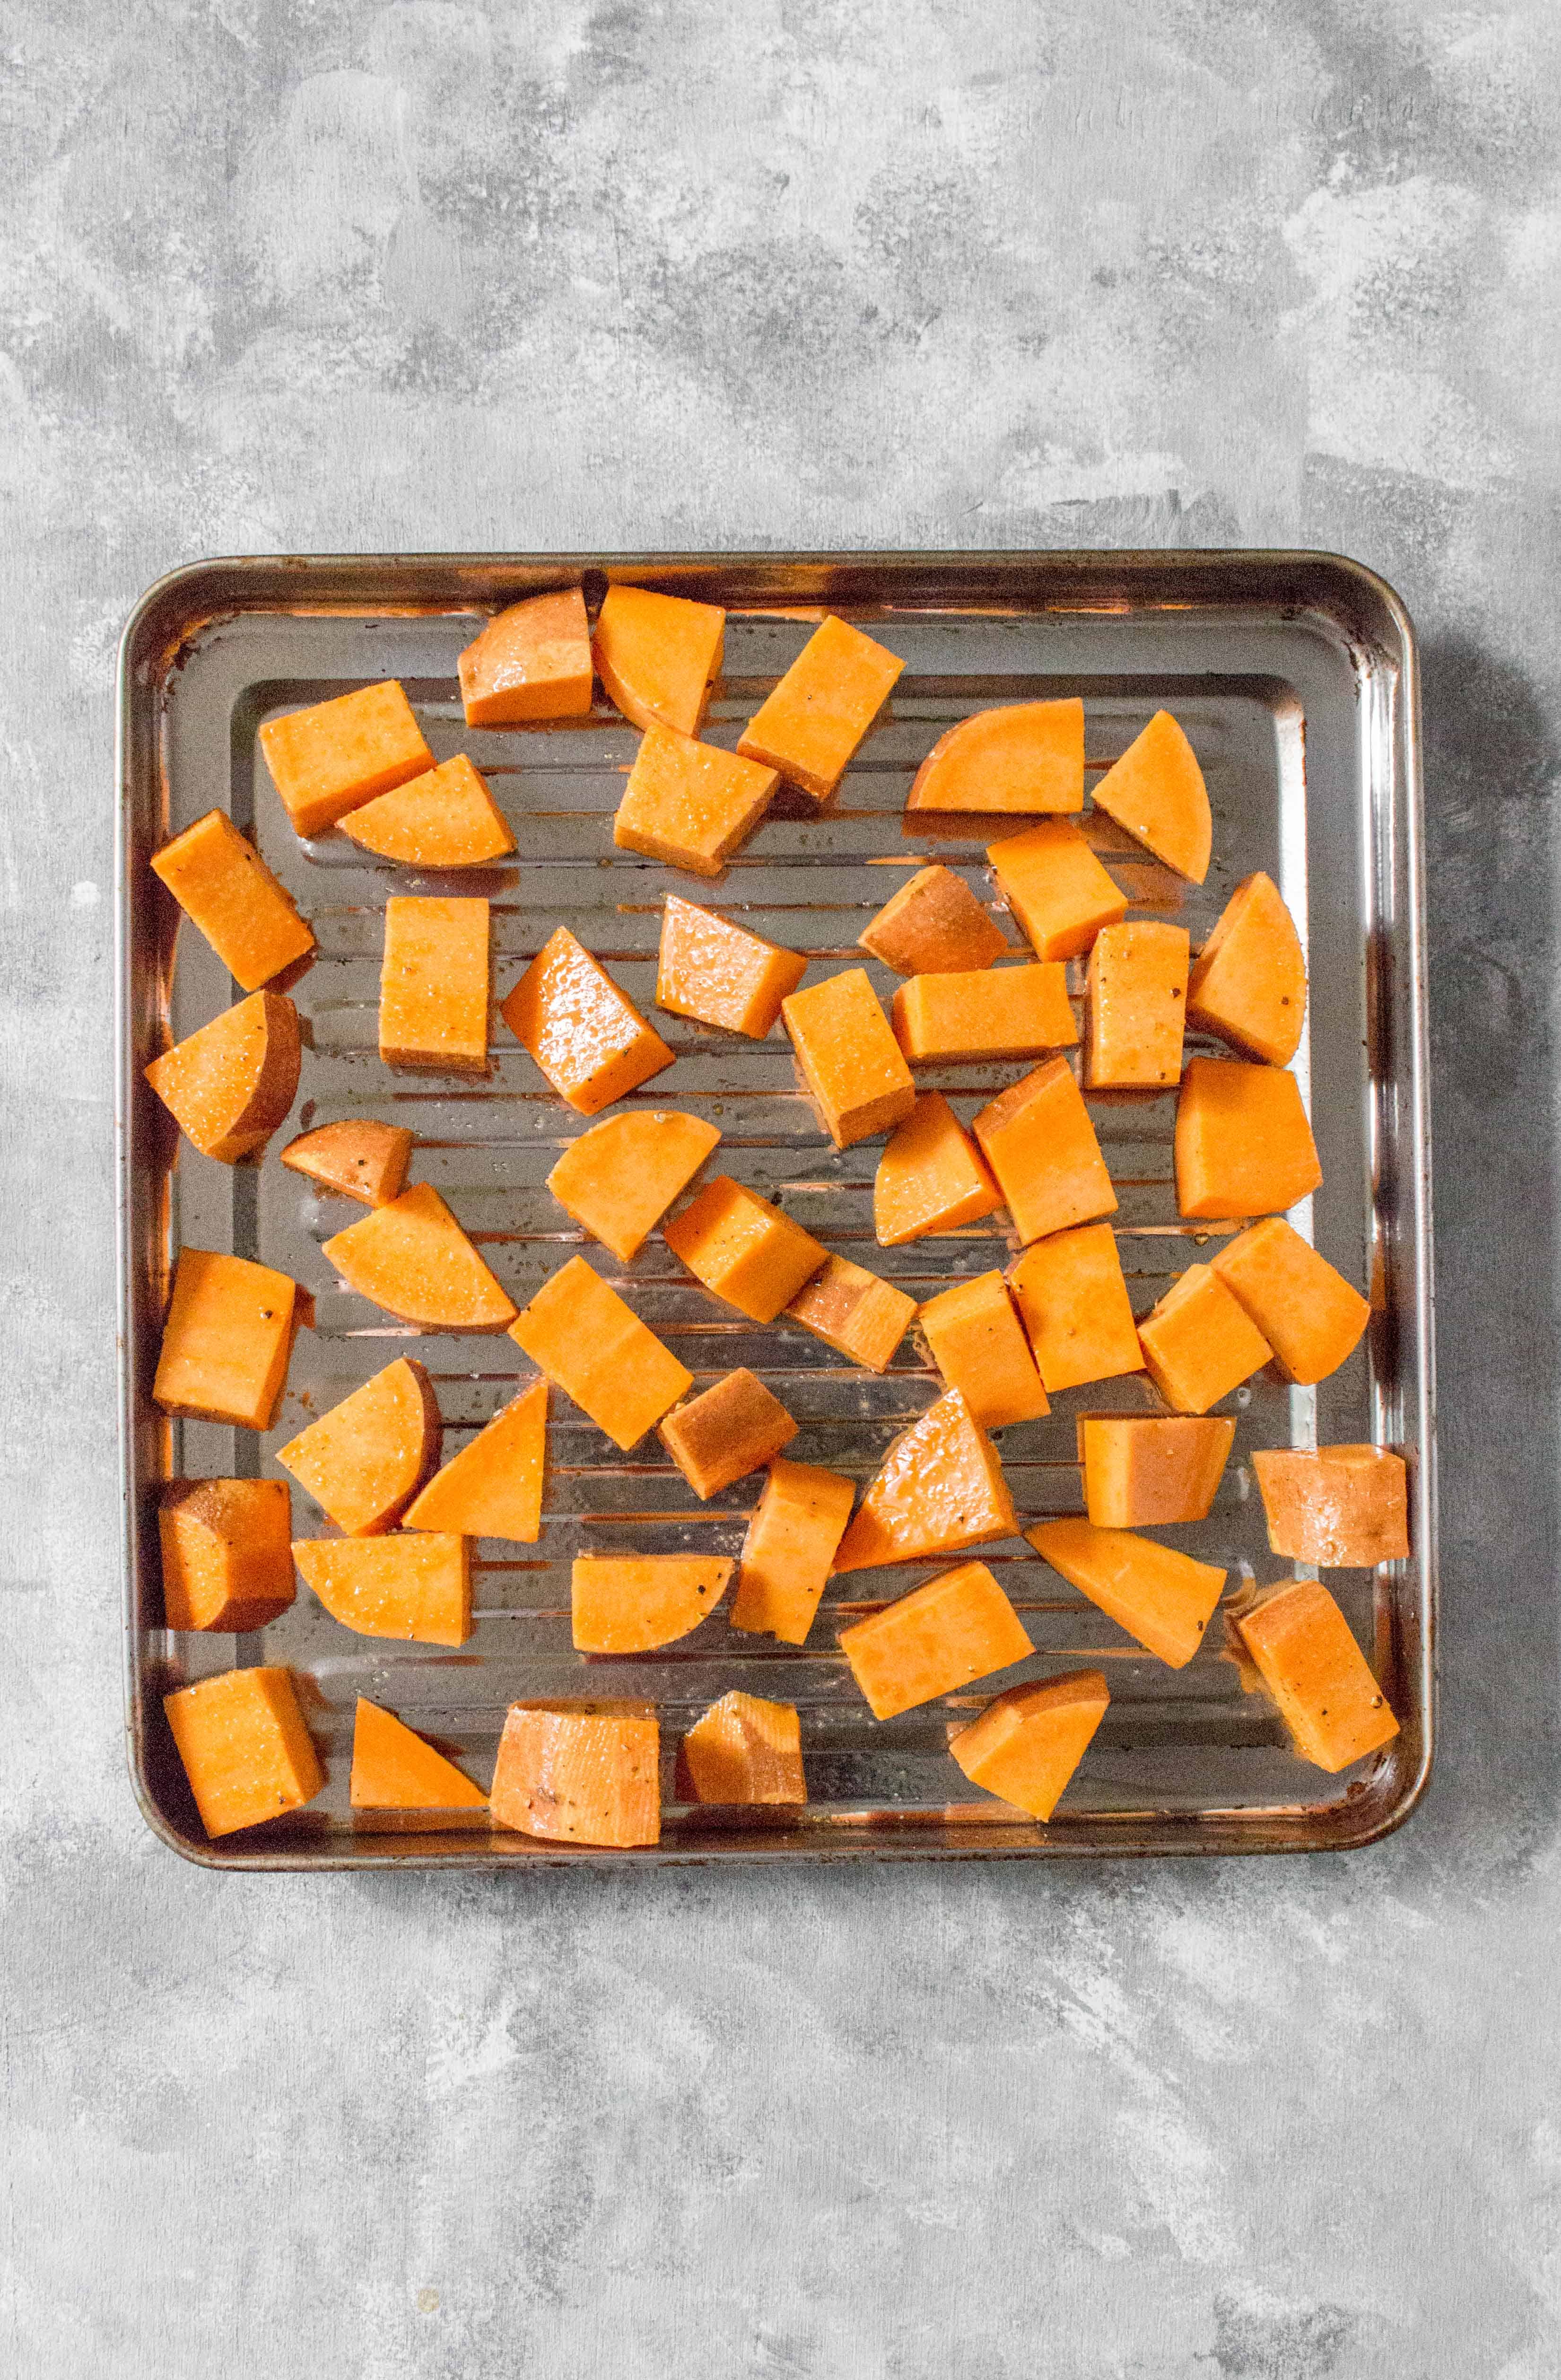 How To Make Crispy Roasted Sweet Potato Cubes